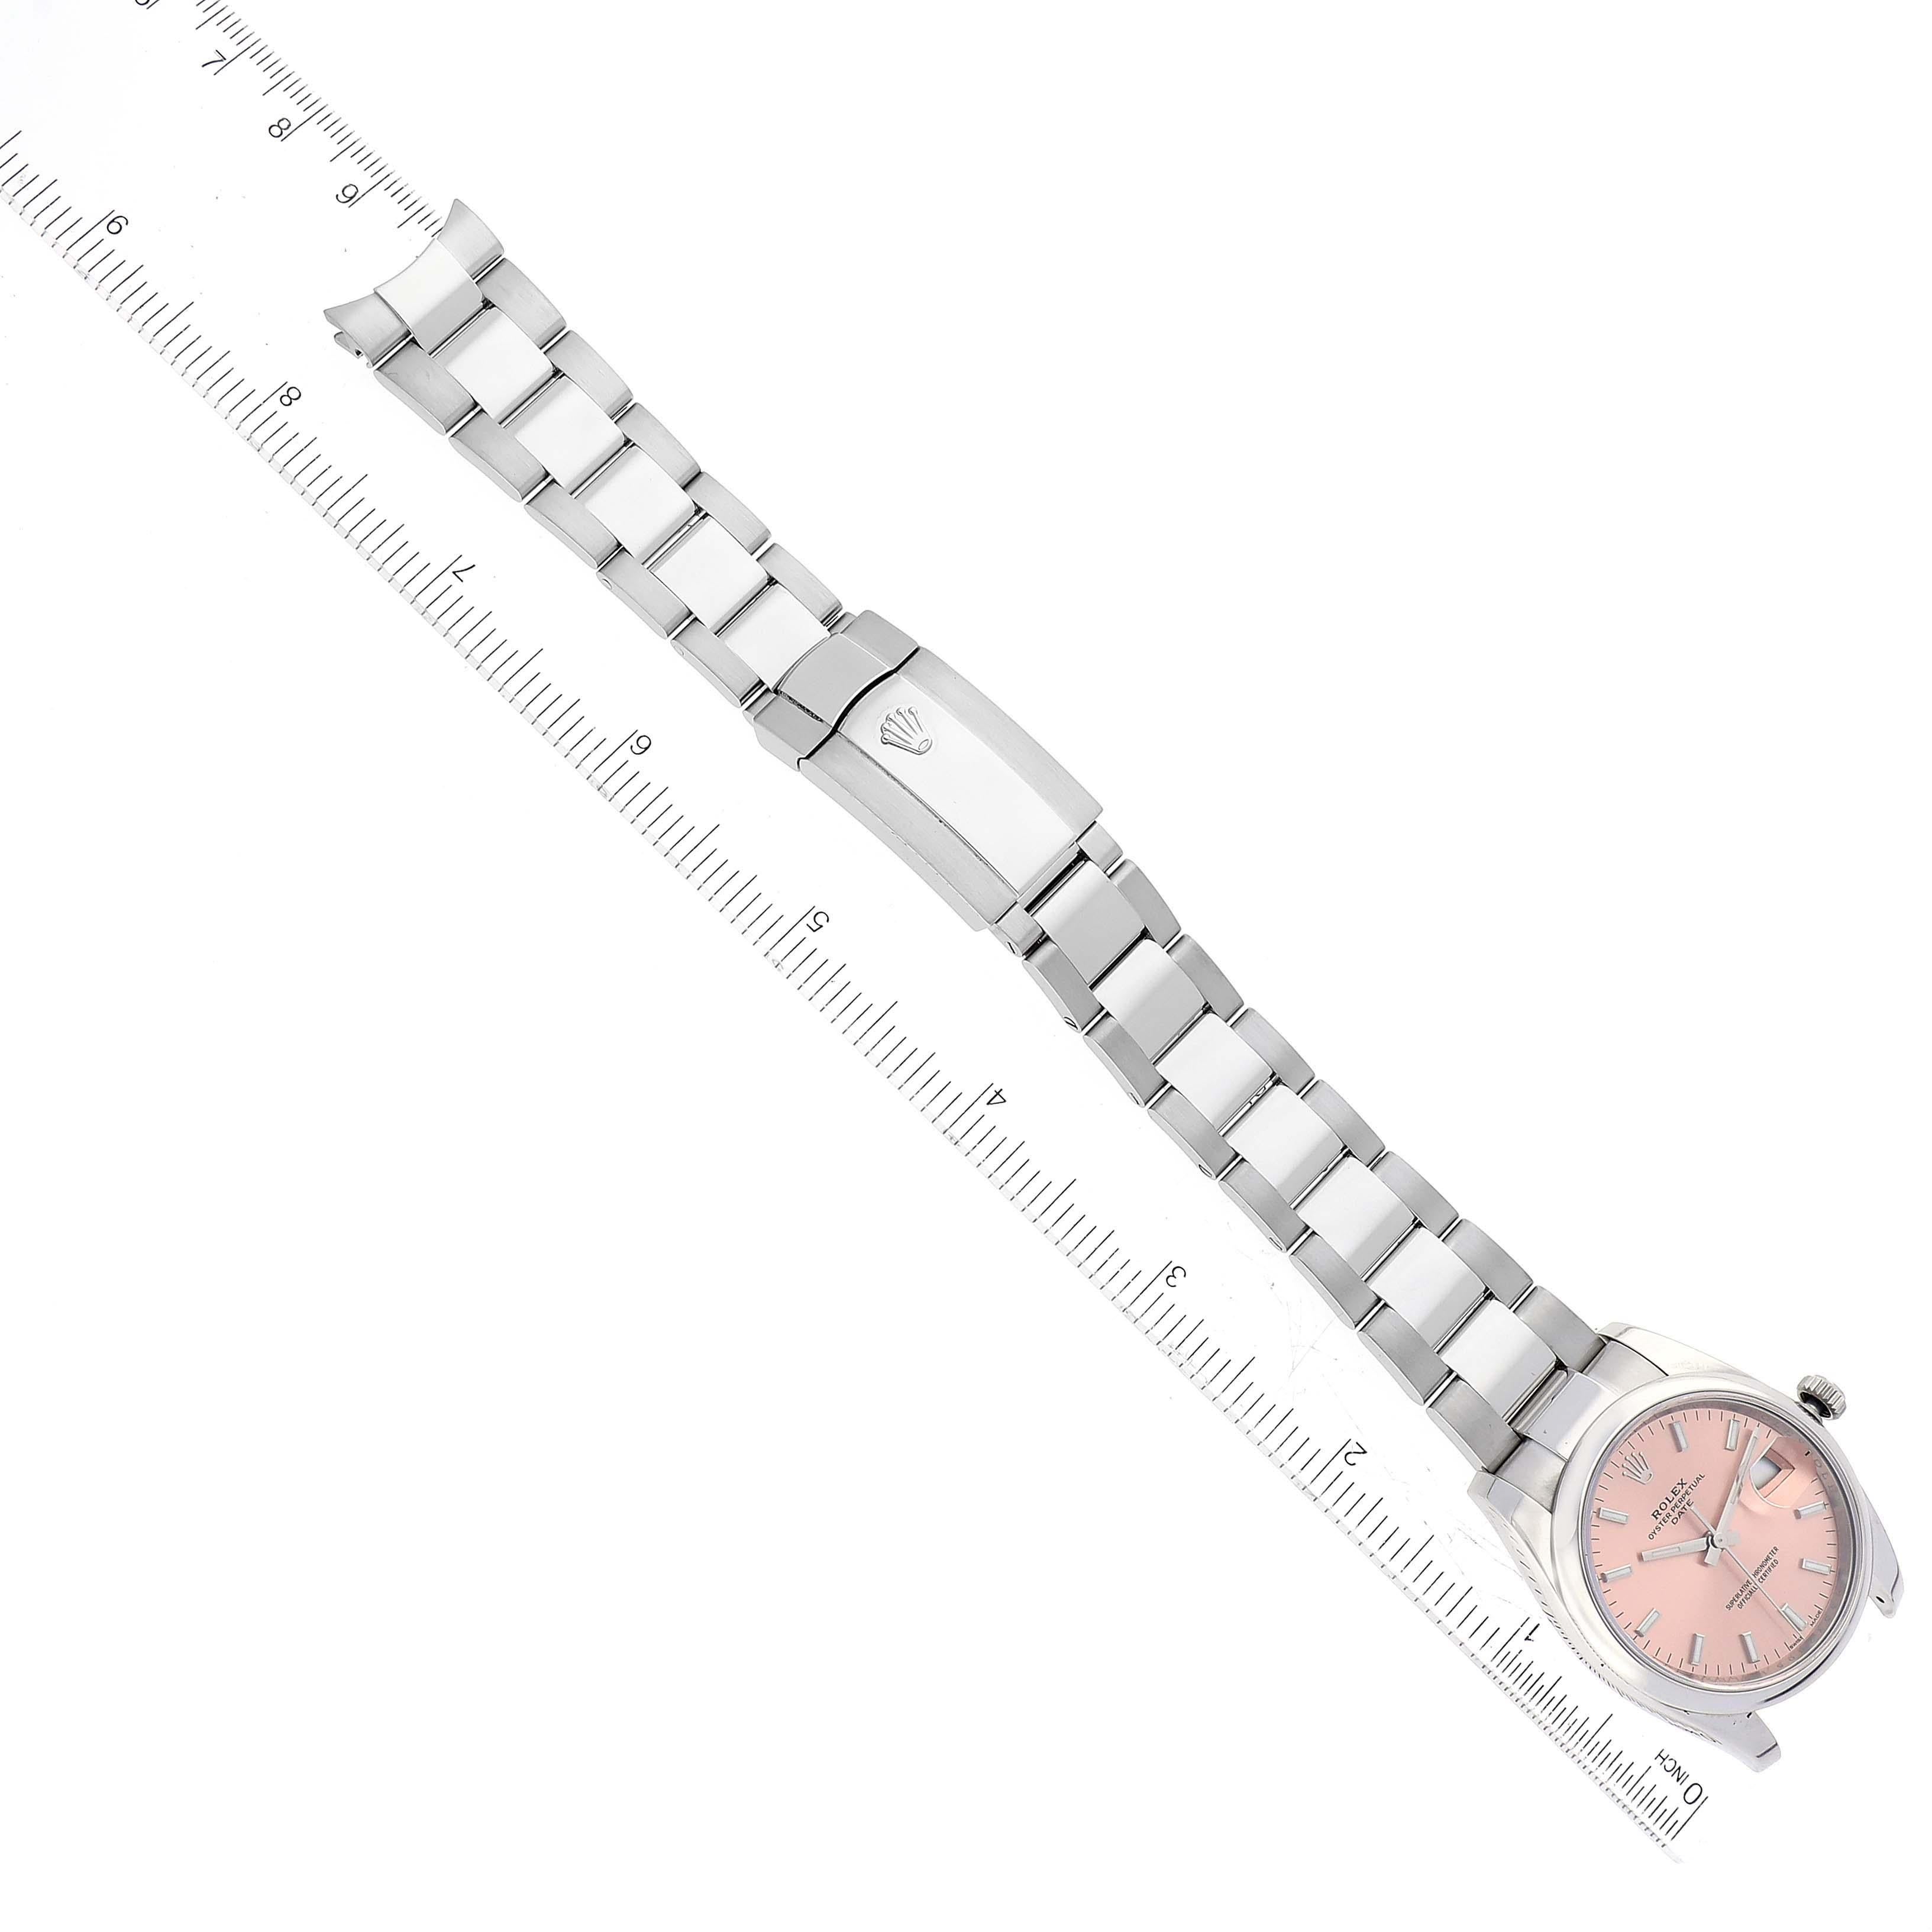 Rolex Date Salmon Dial Oyster Bracelet Steel Mens Watch 115200 Box Card 6